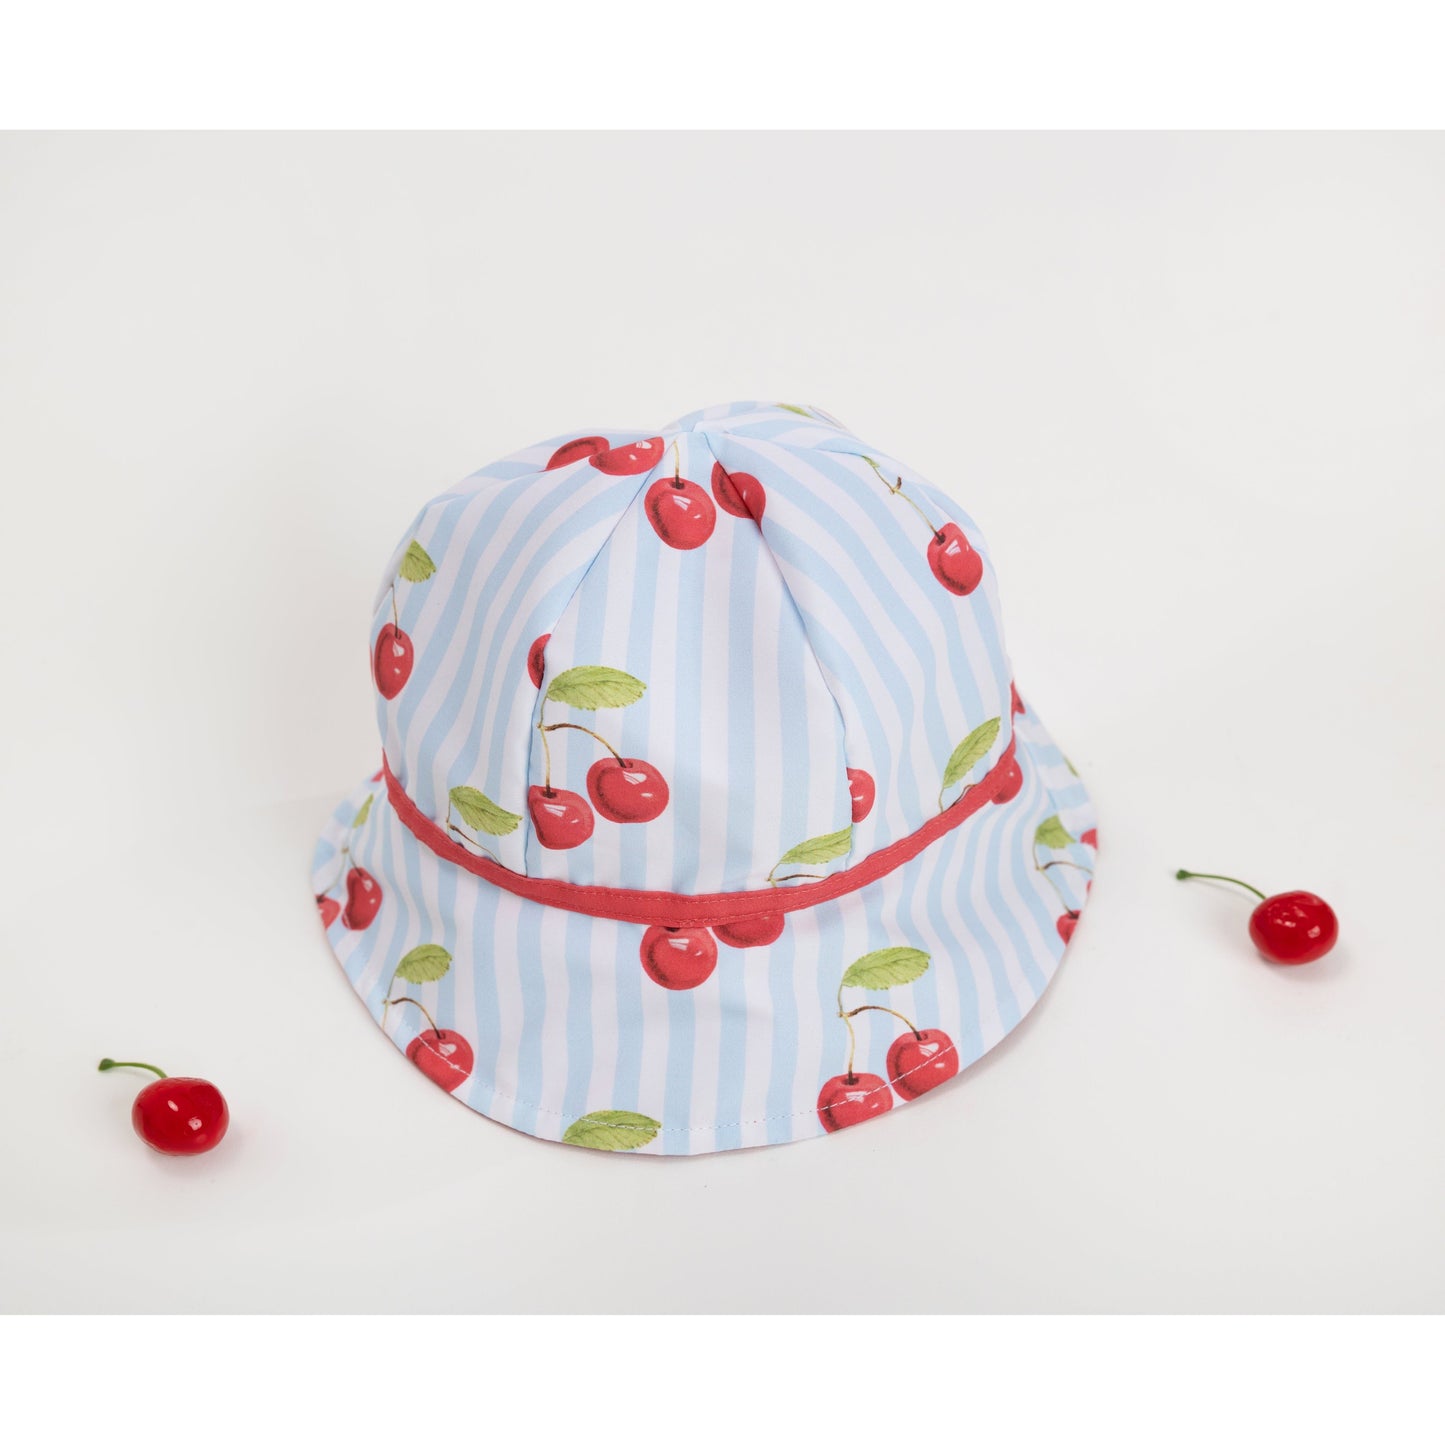 Boys Meia Pata cherry print sun hat - Adora